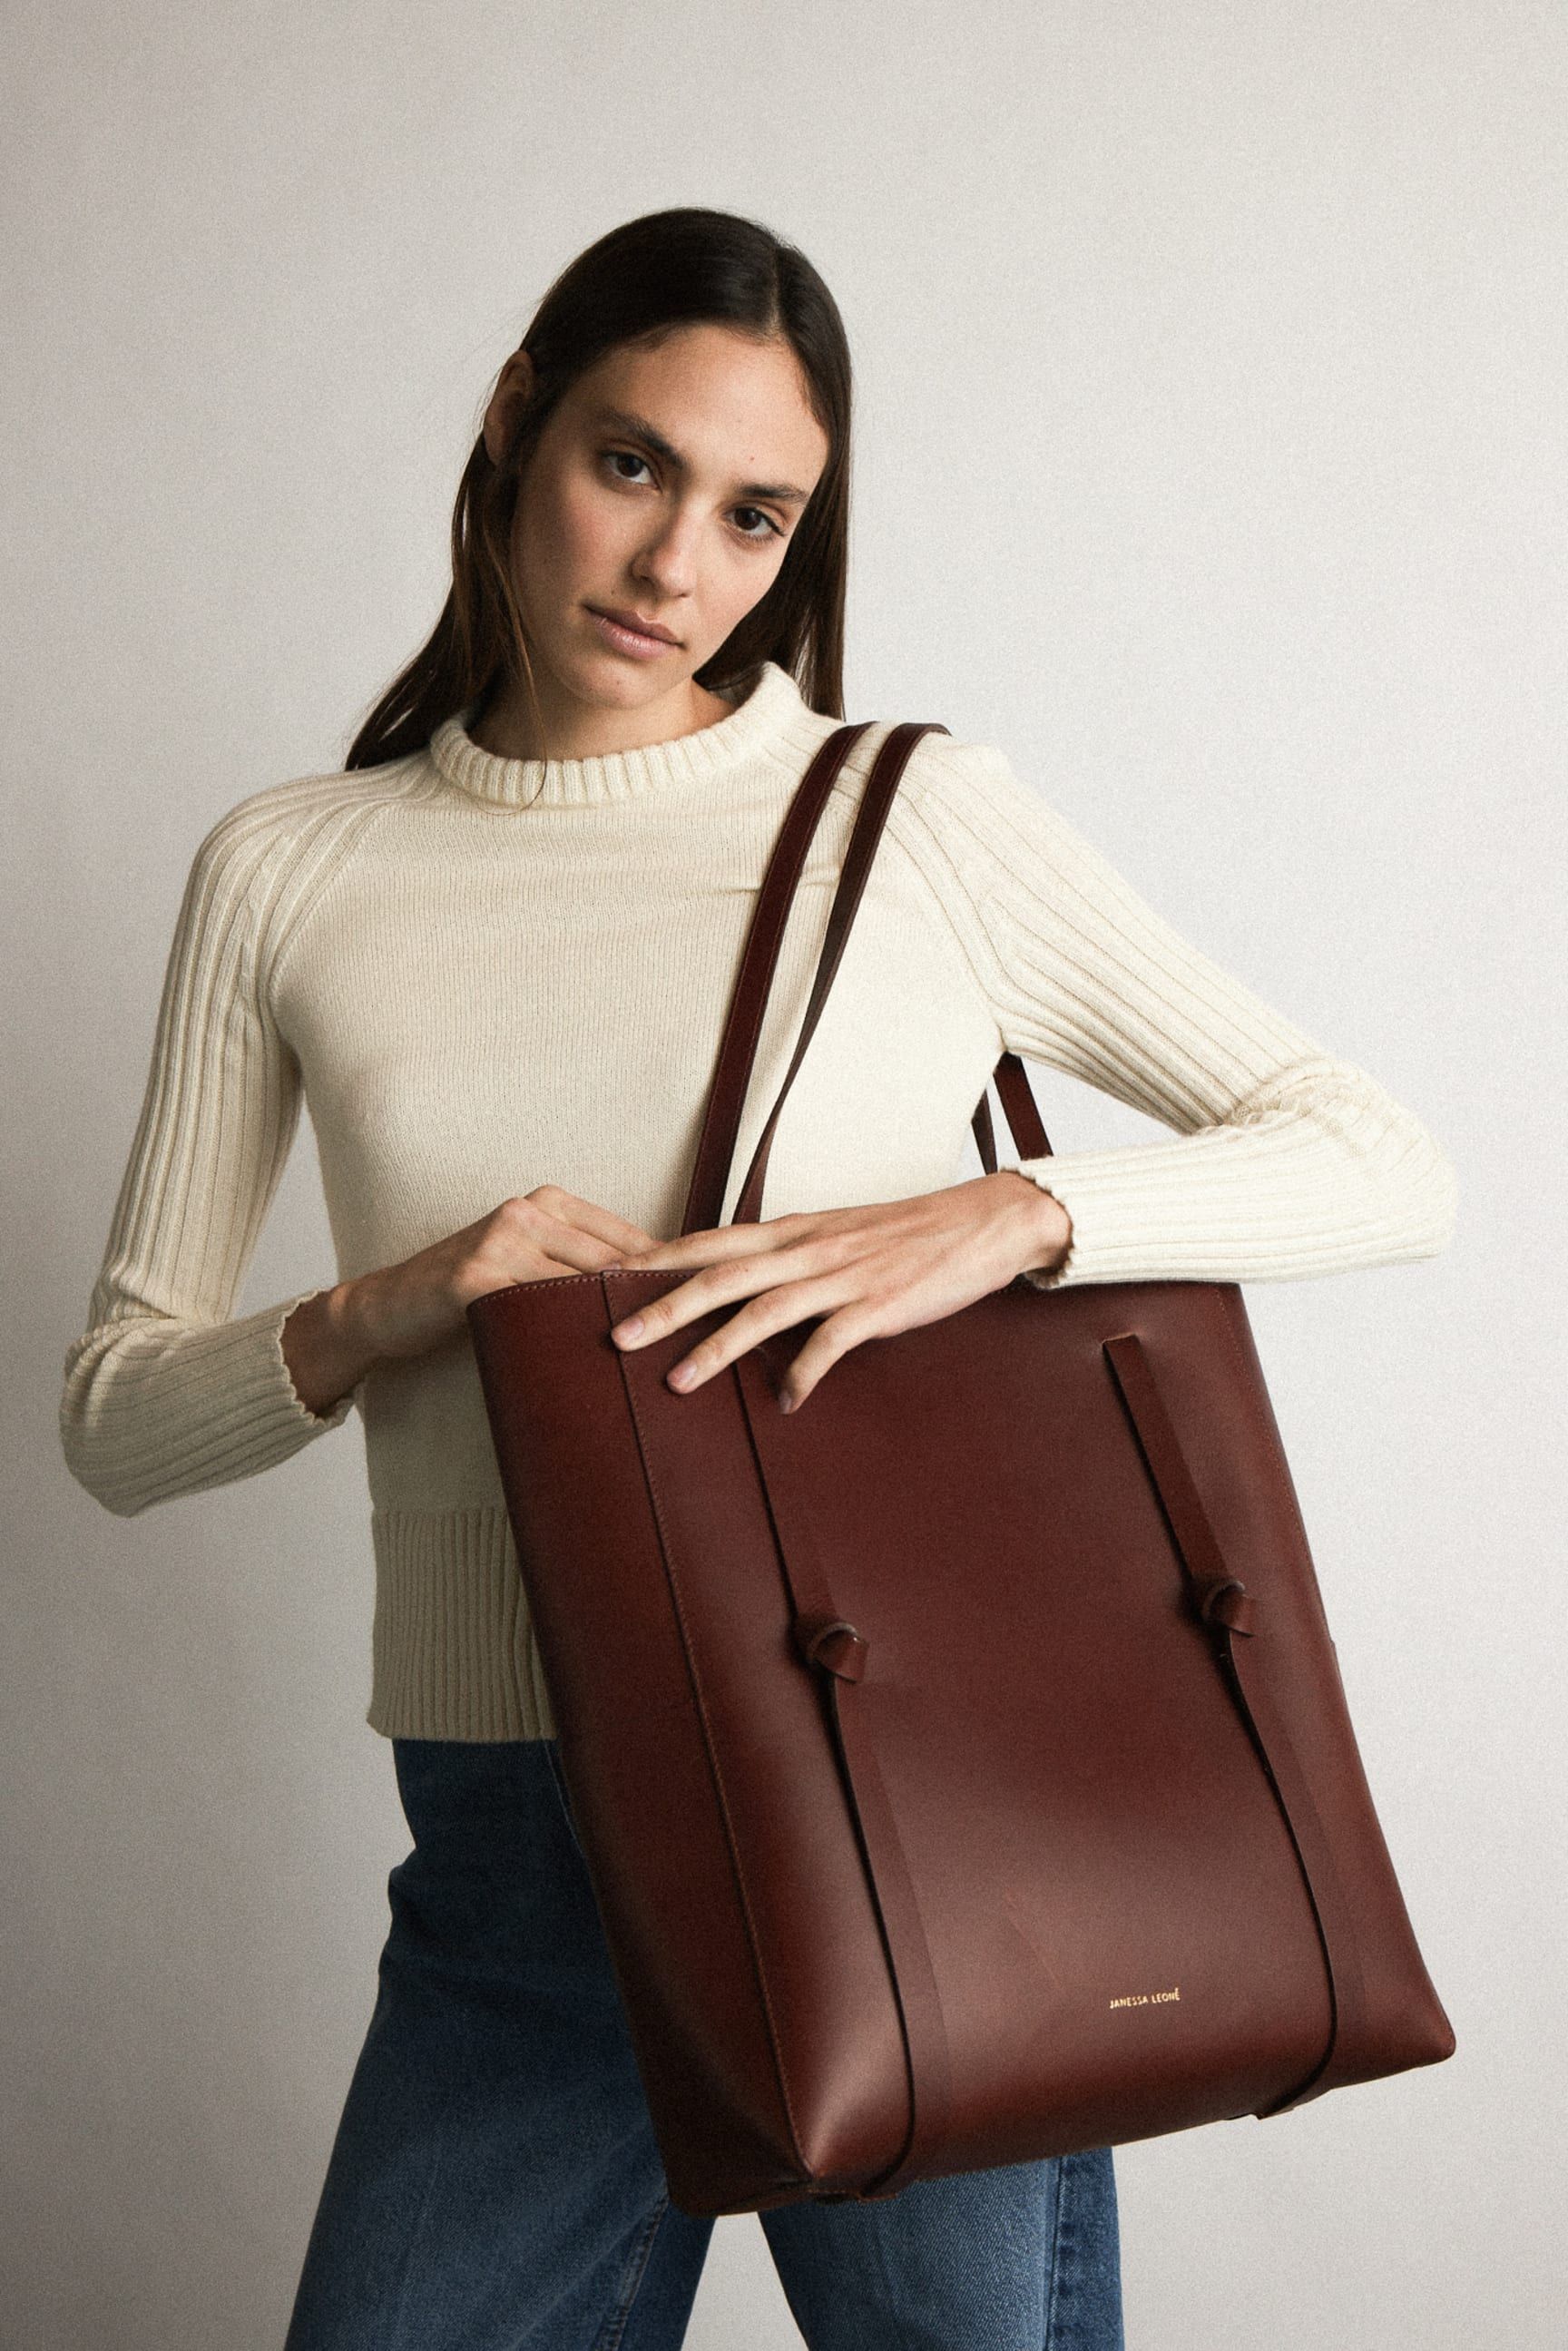 Women's leather travel bags - Von Baer